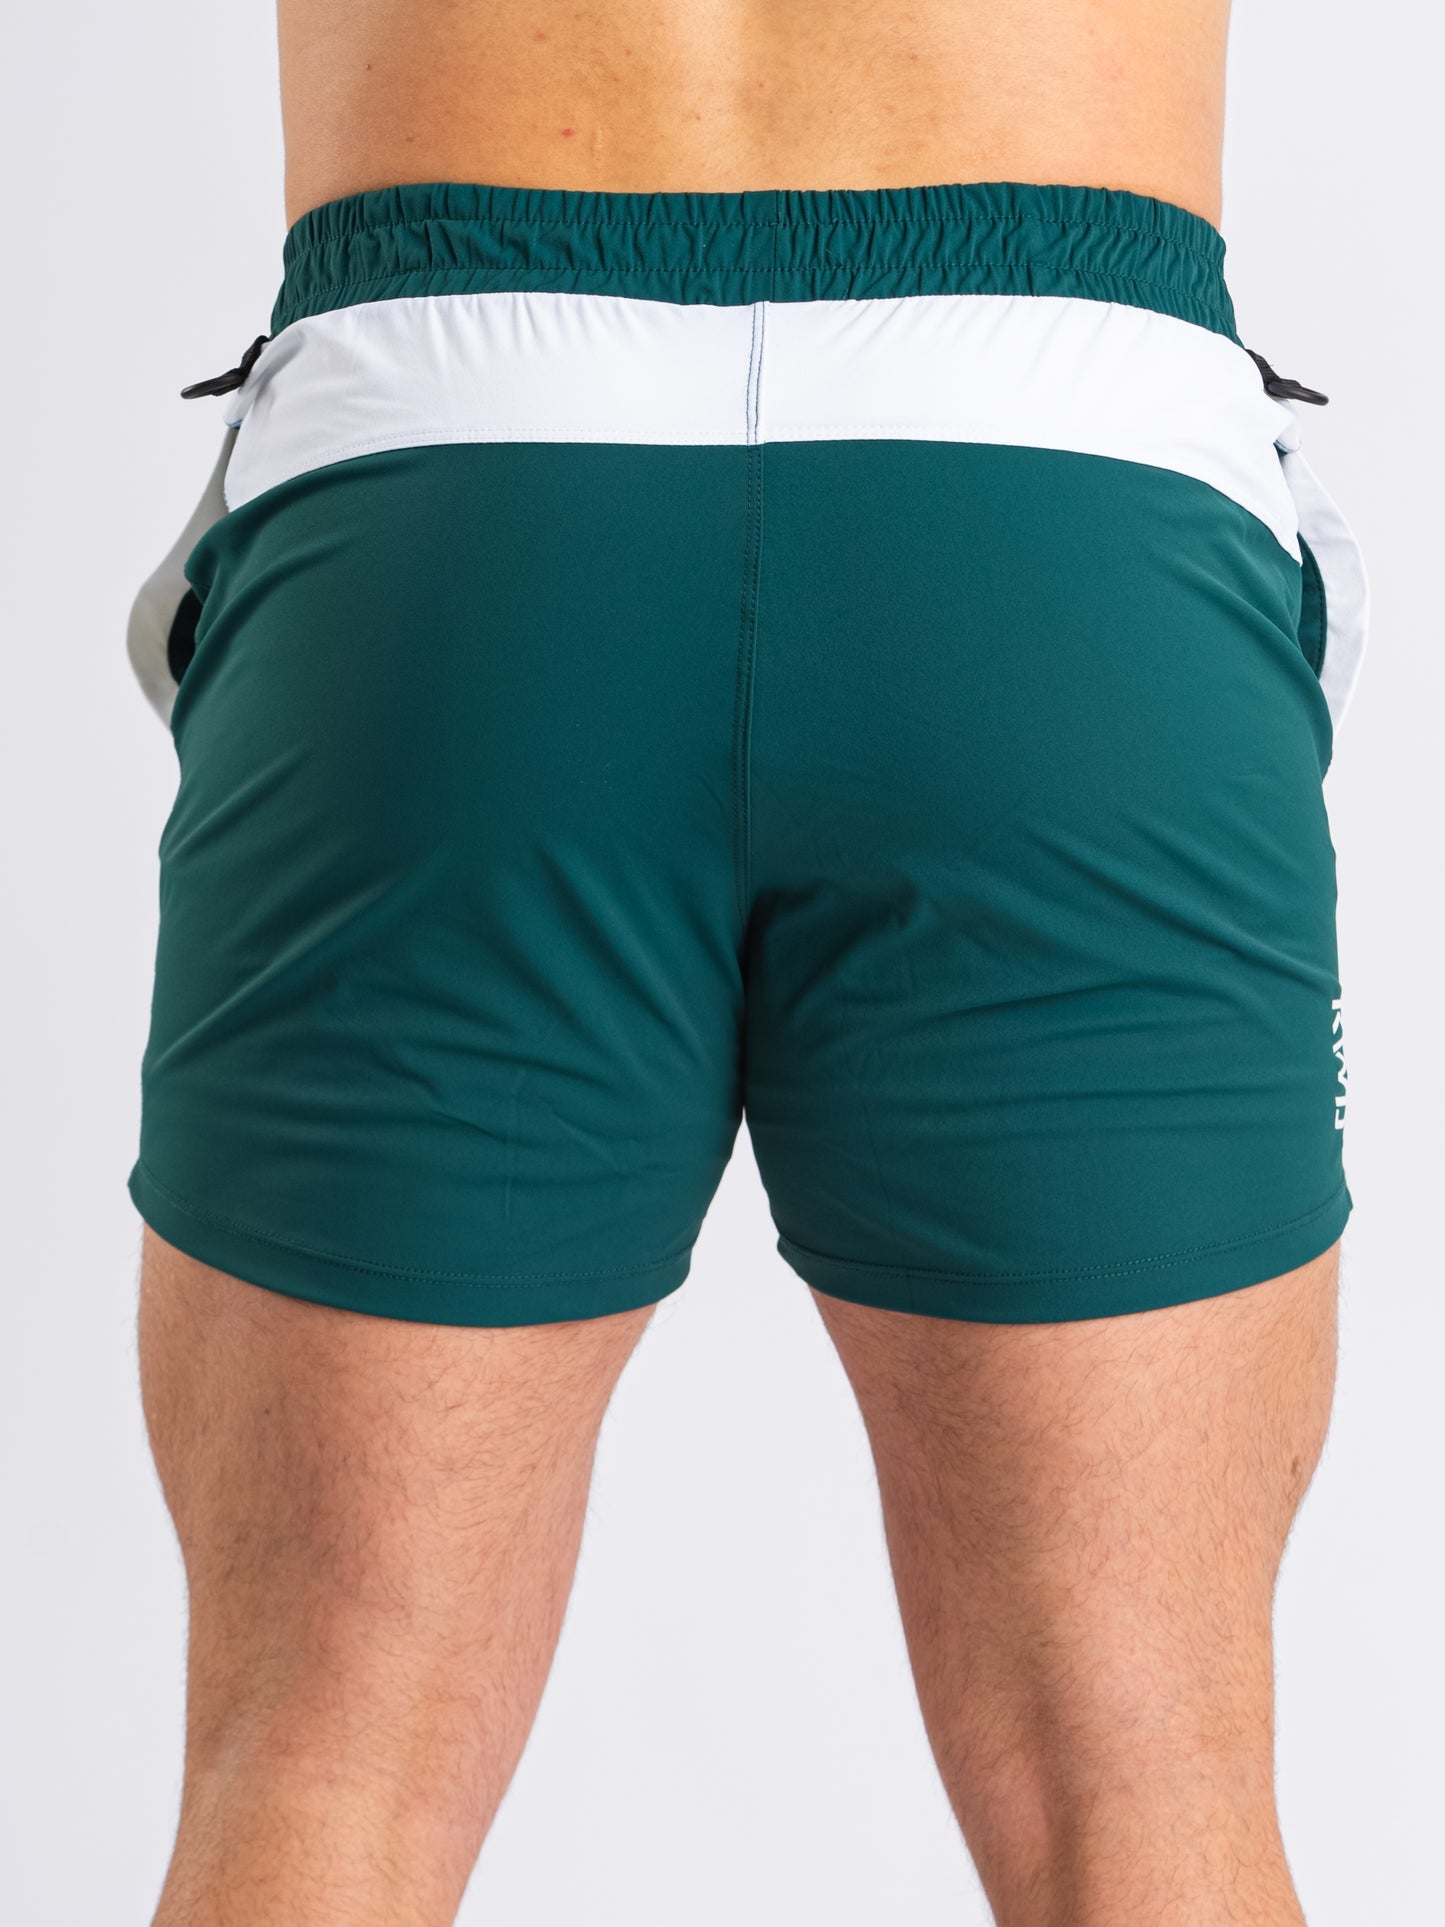 
                  
                    360Go 1Z KWD Shorts - Emerald Forás
                  
                